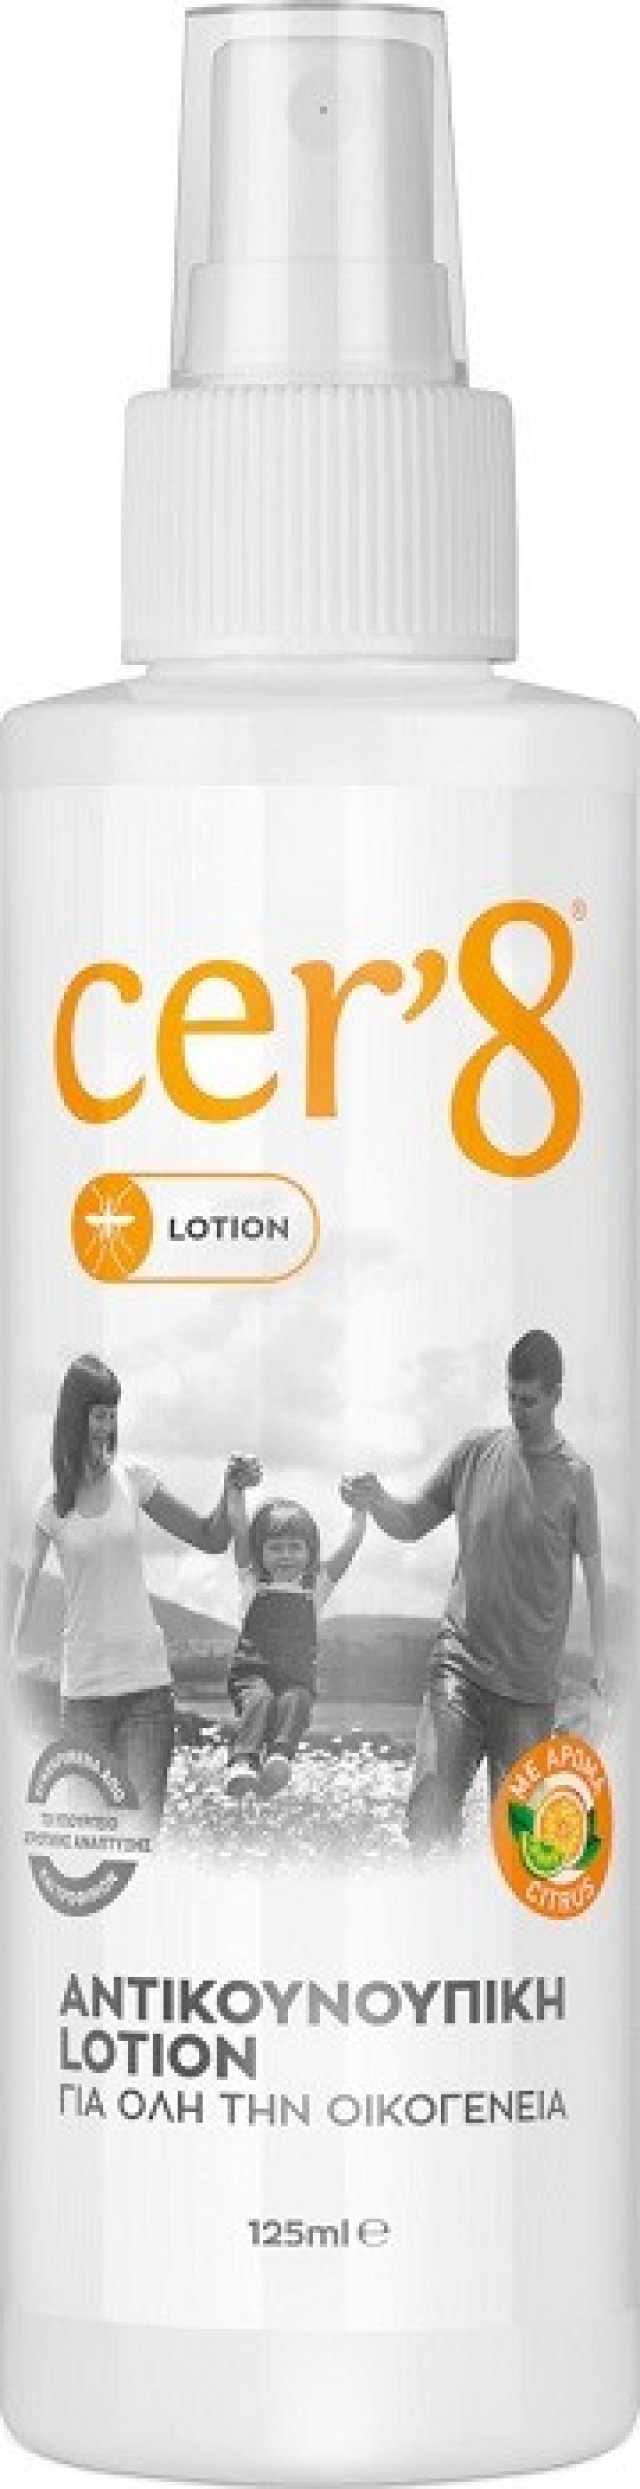 Vican Cer8 Αντικουνουπική Lotion για Ενήλικες & Παιδιά 125ml